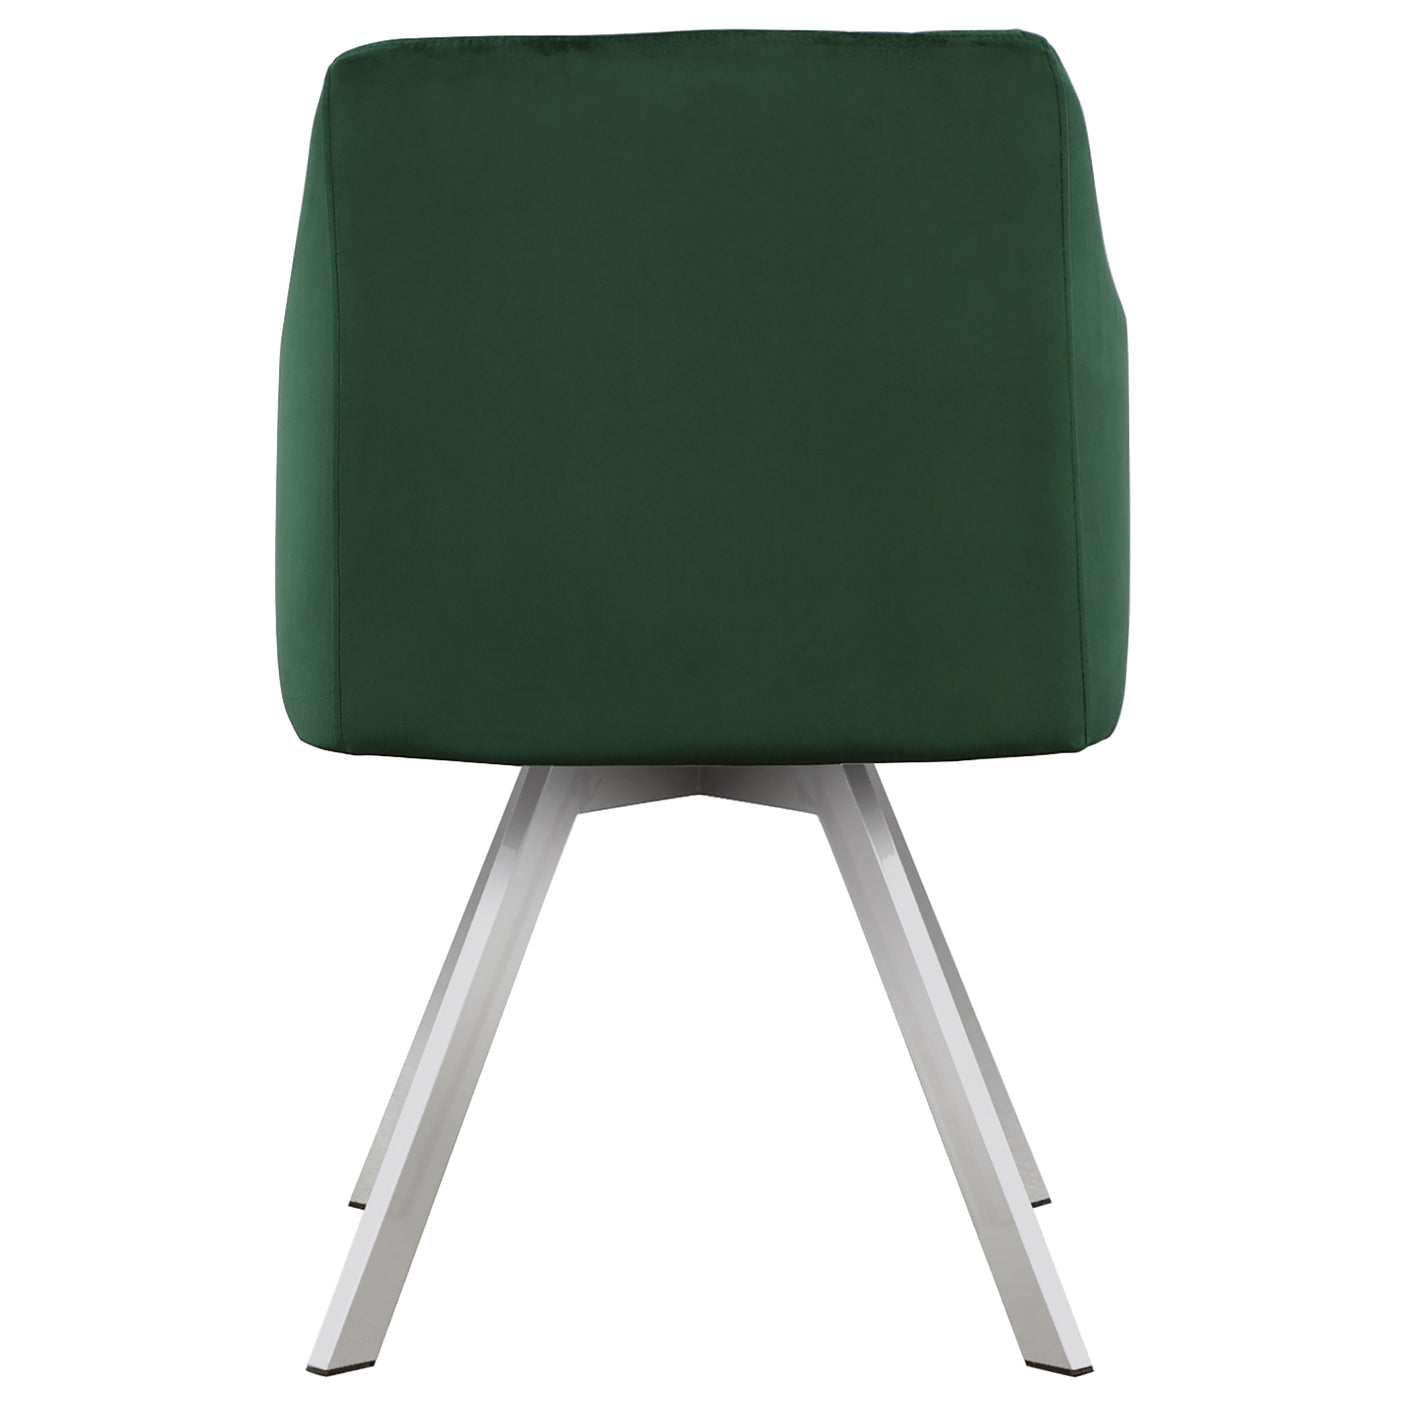 Swivel Arm Chair - Arika Channeled Back Swivel Dining Chair Green